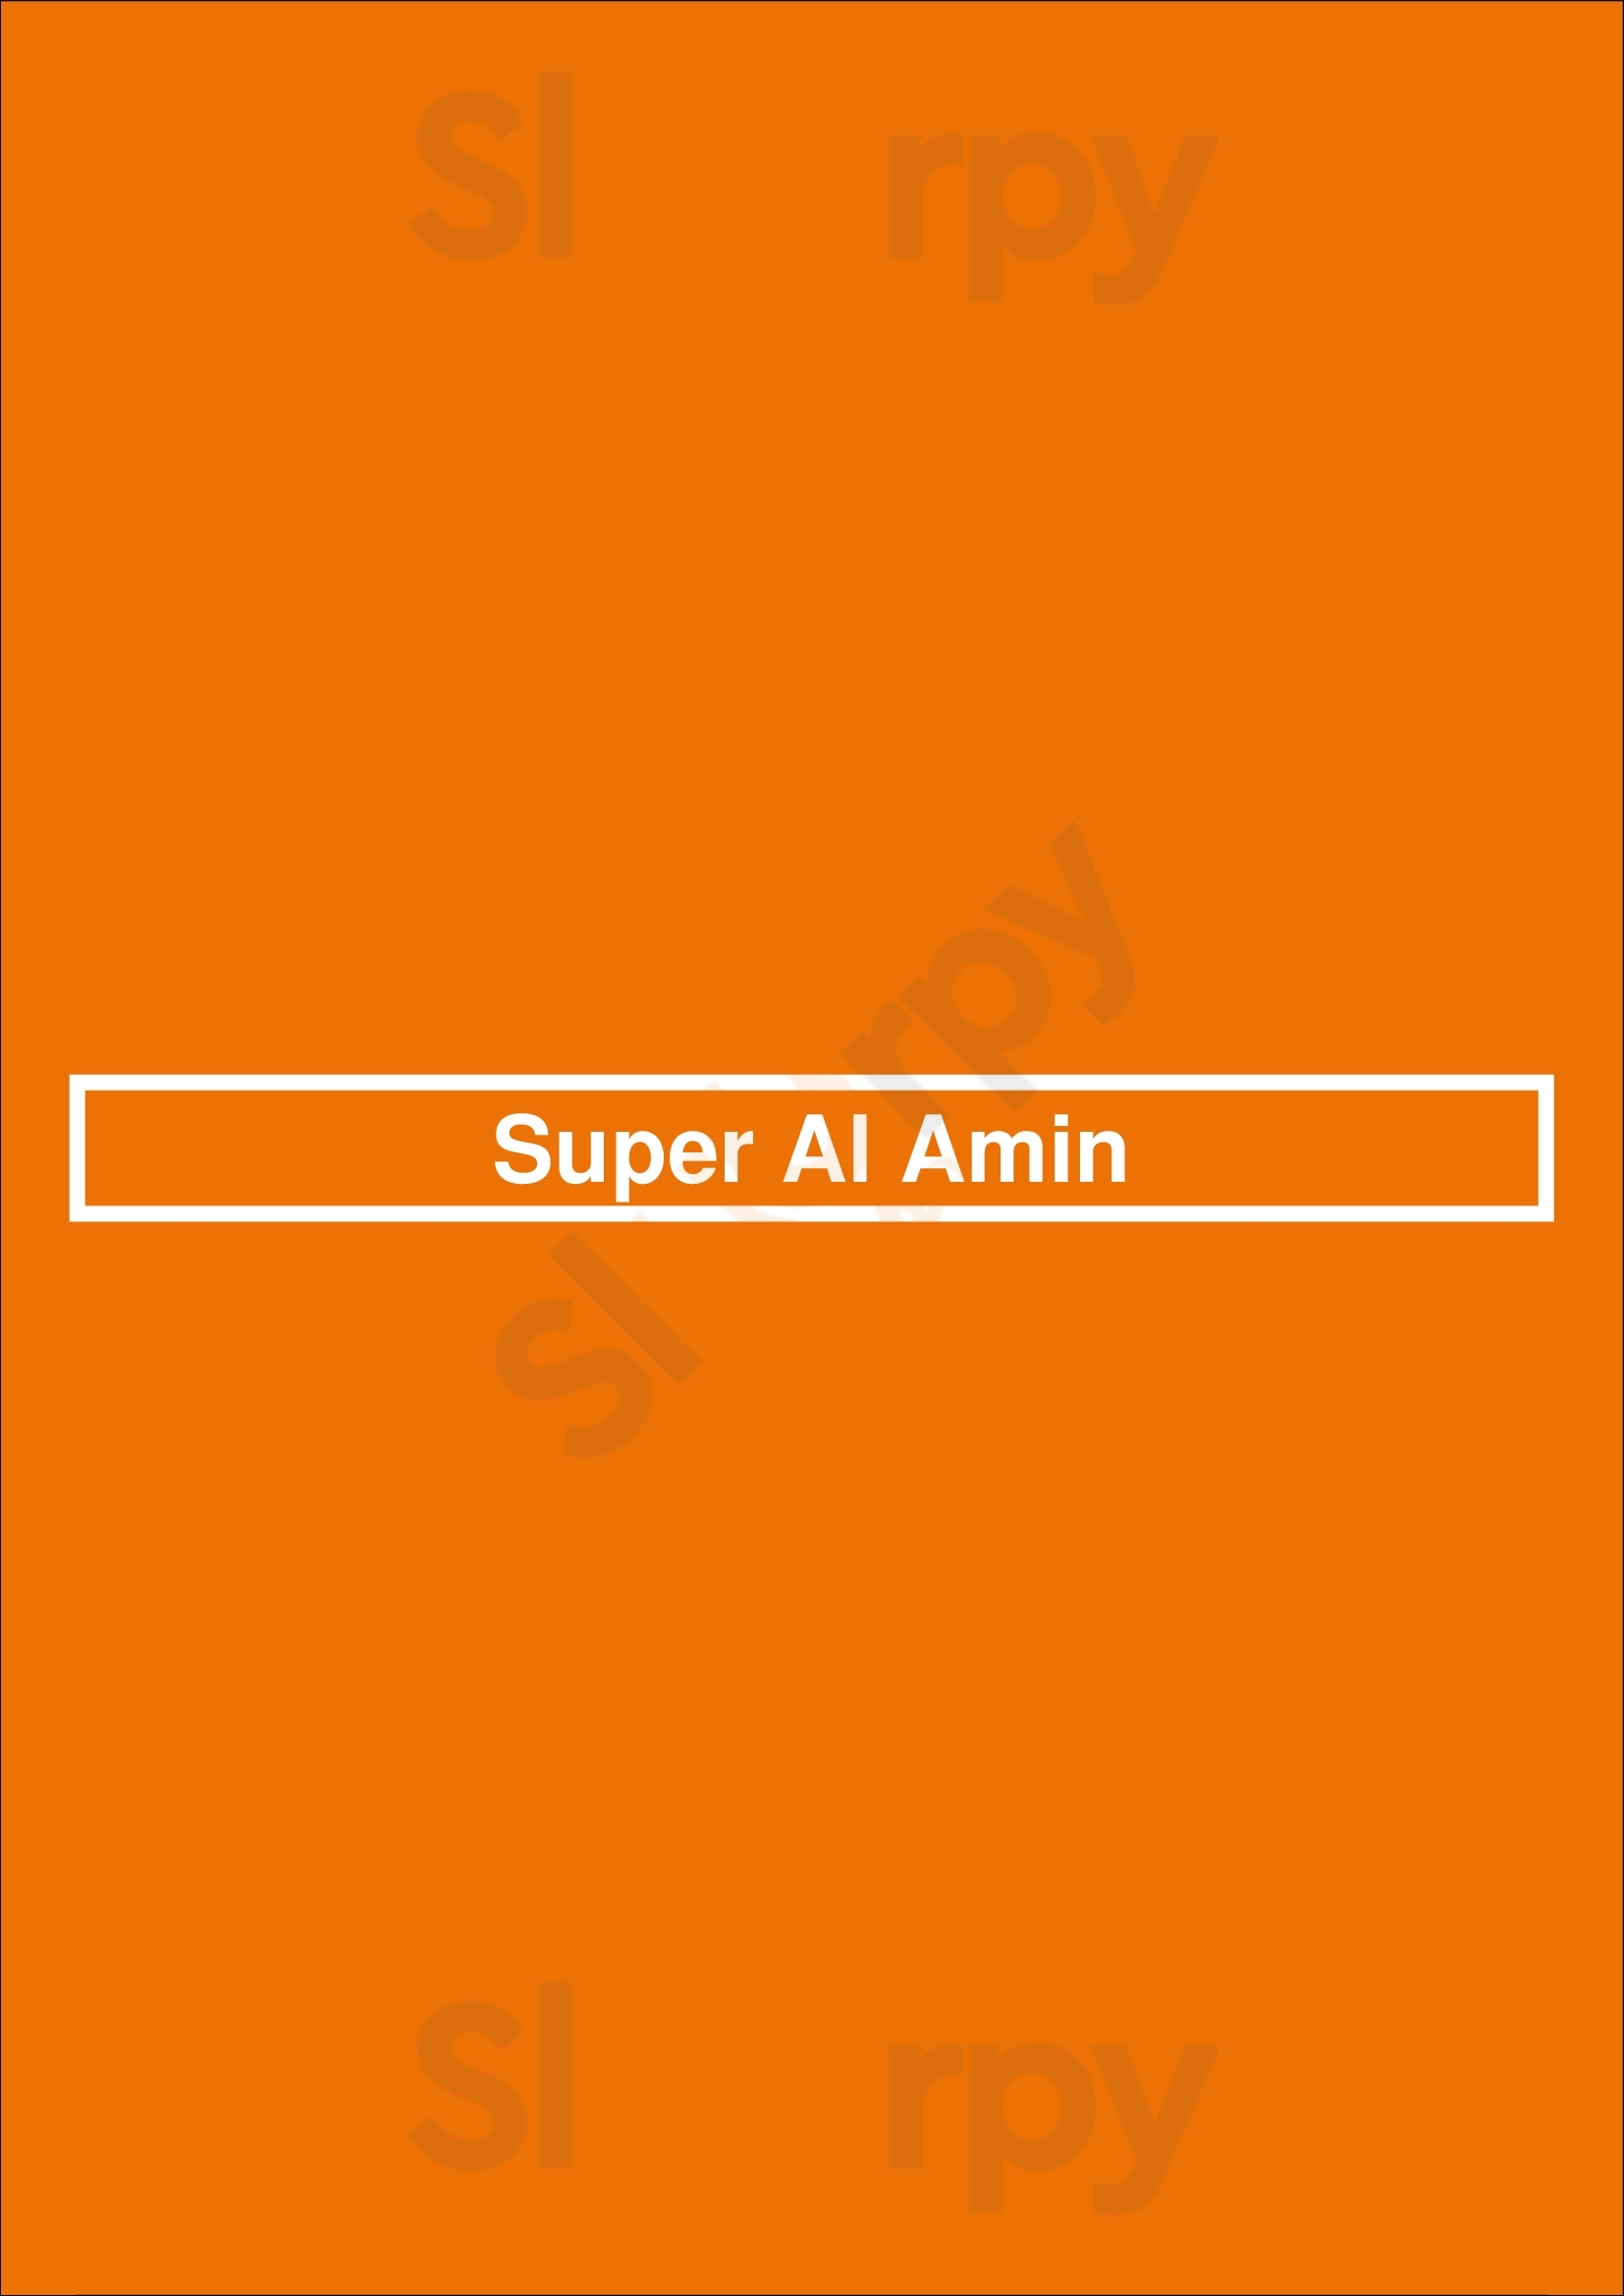 Super Al Amin Los Angeles Menu - 1